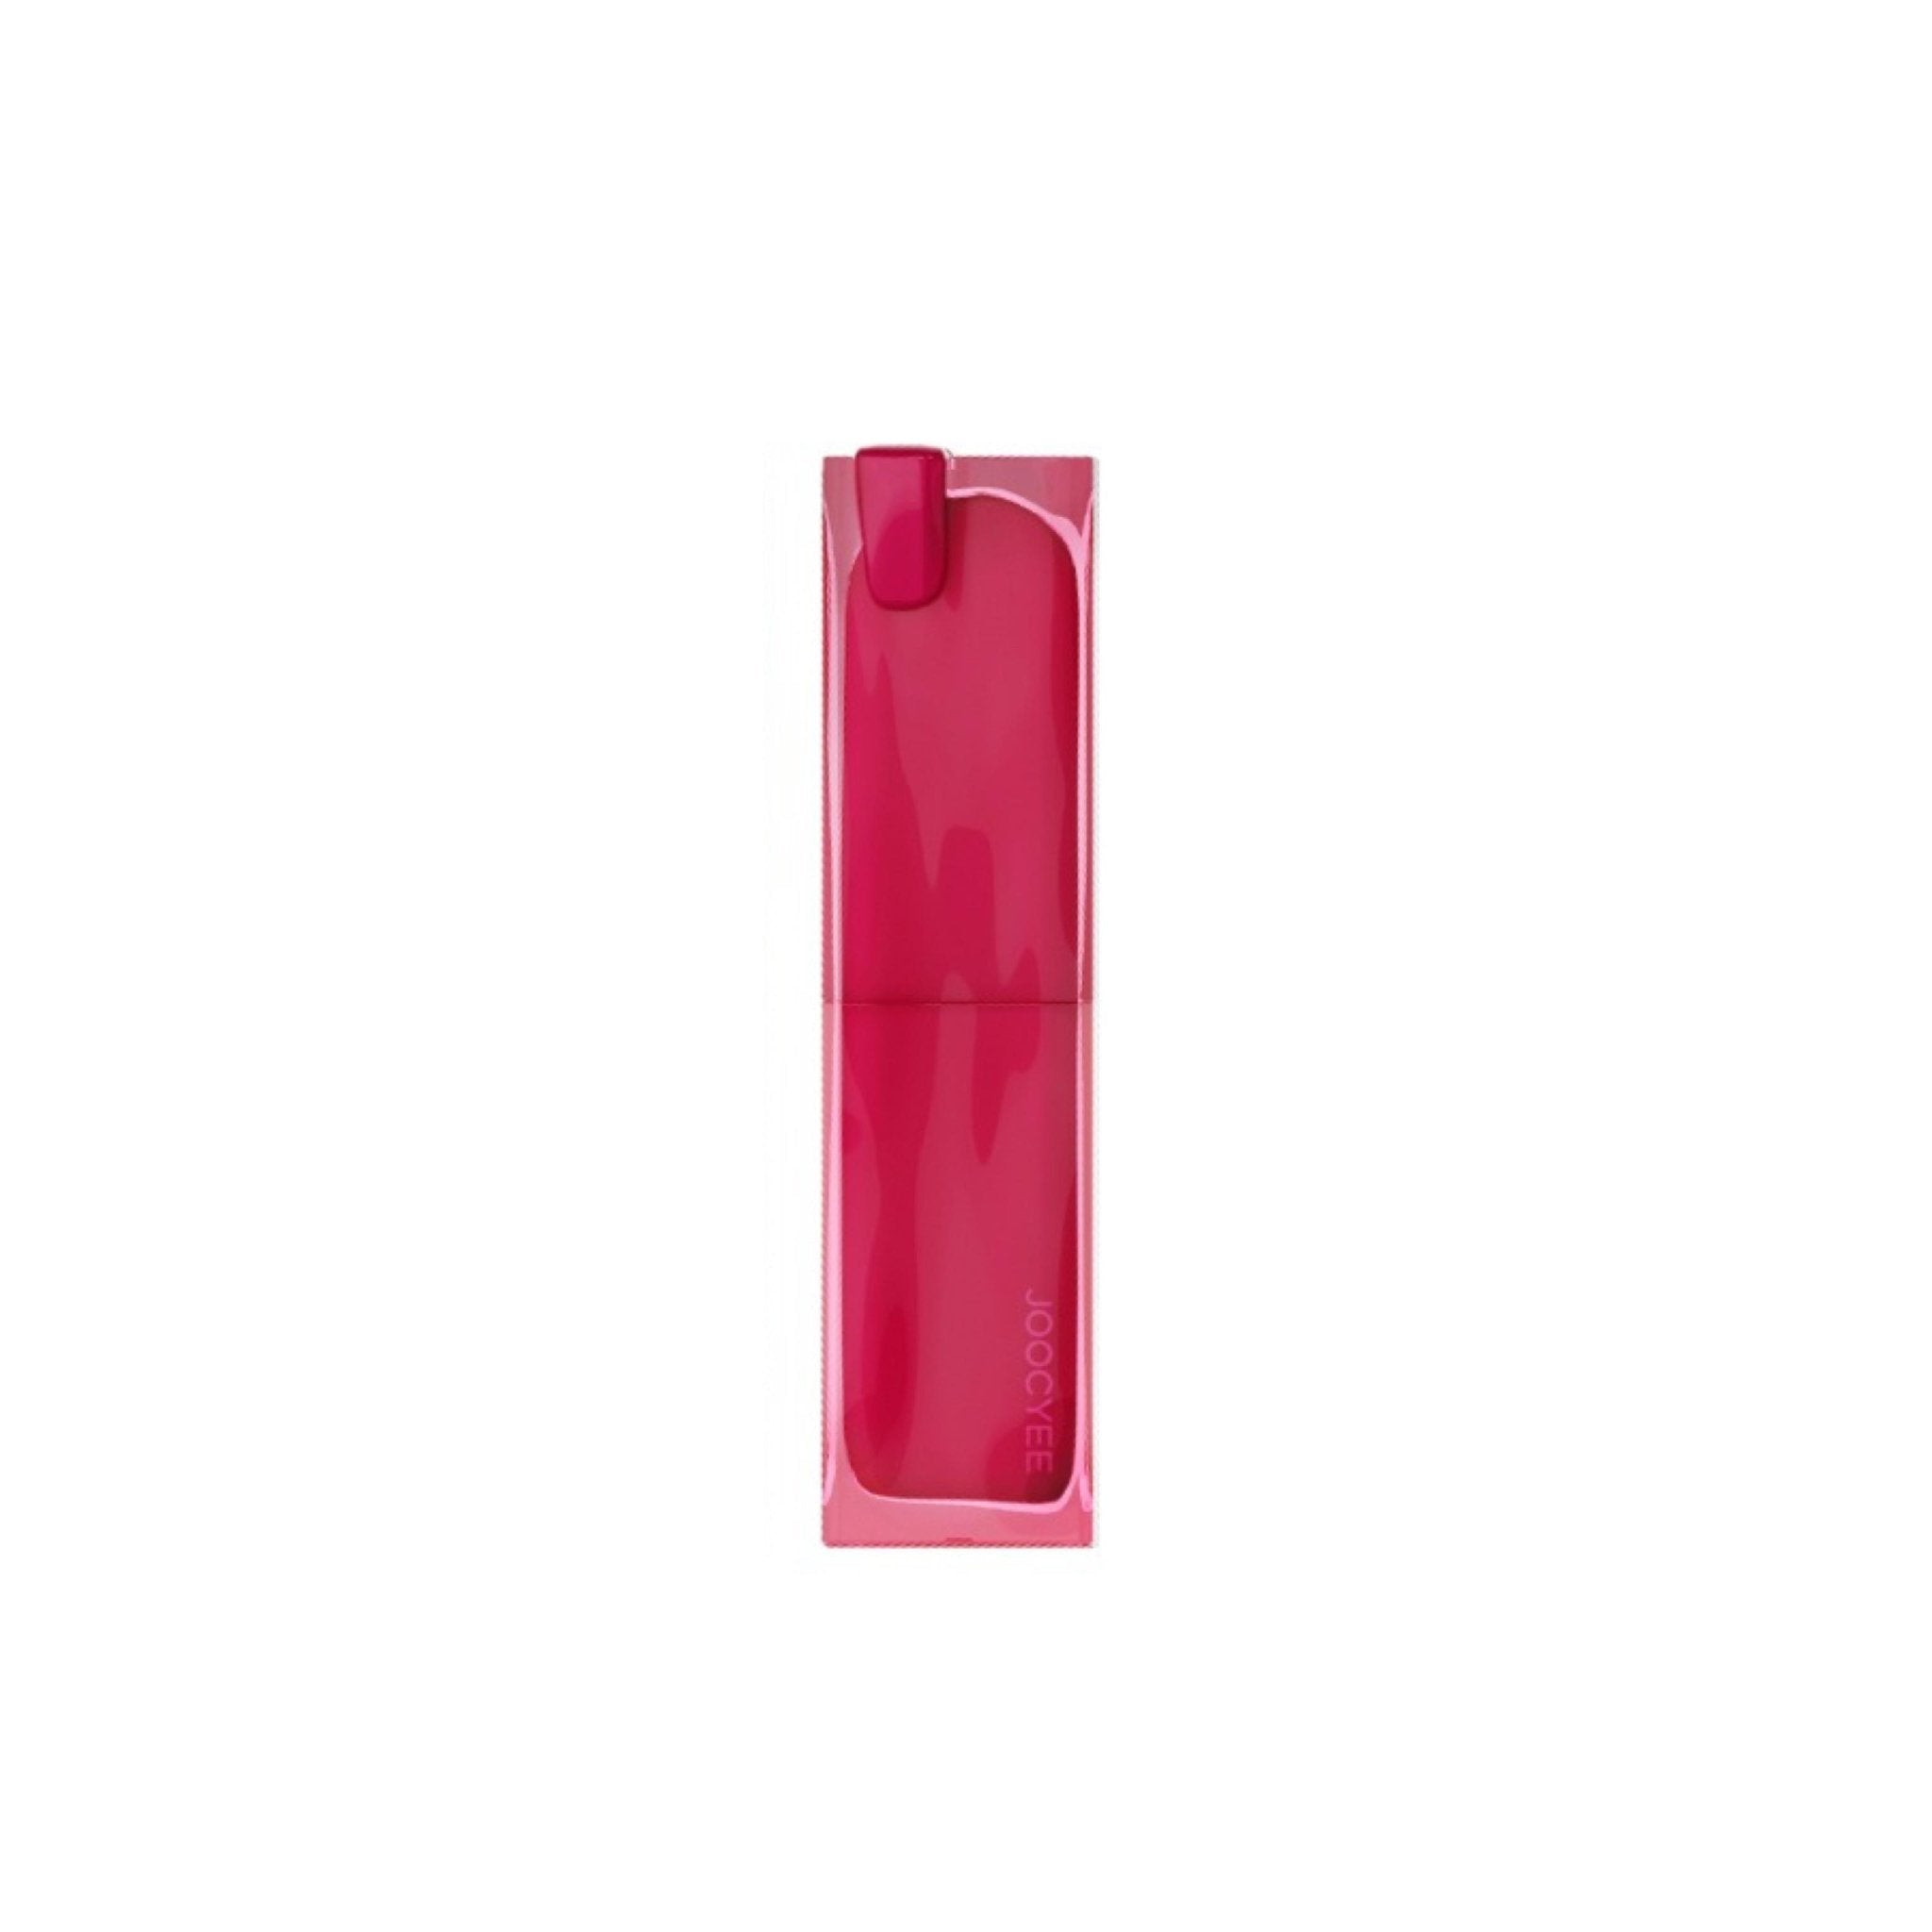 Joocyee Pink Power Lip Rouge JC039 - Chic Decent